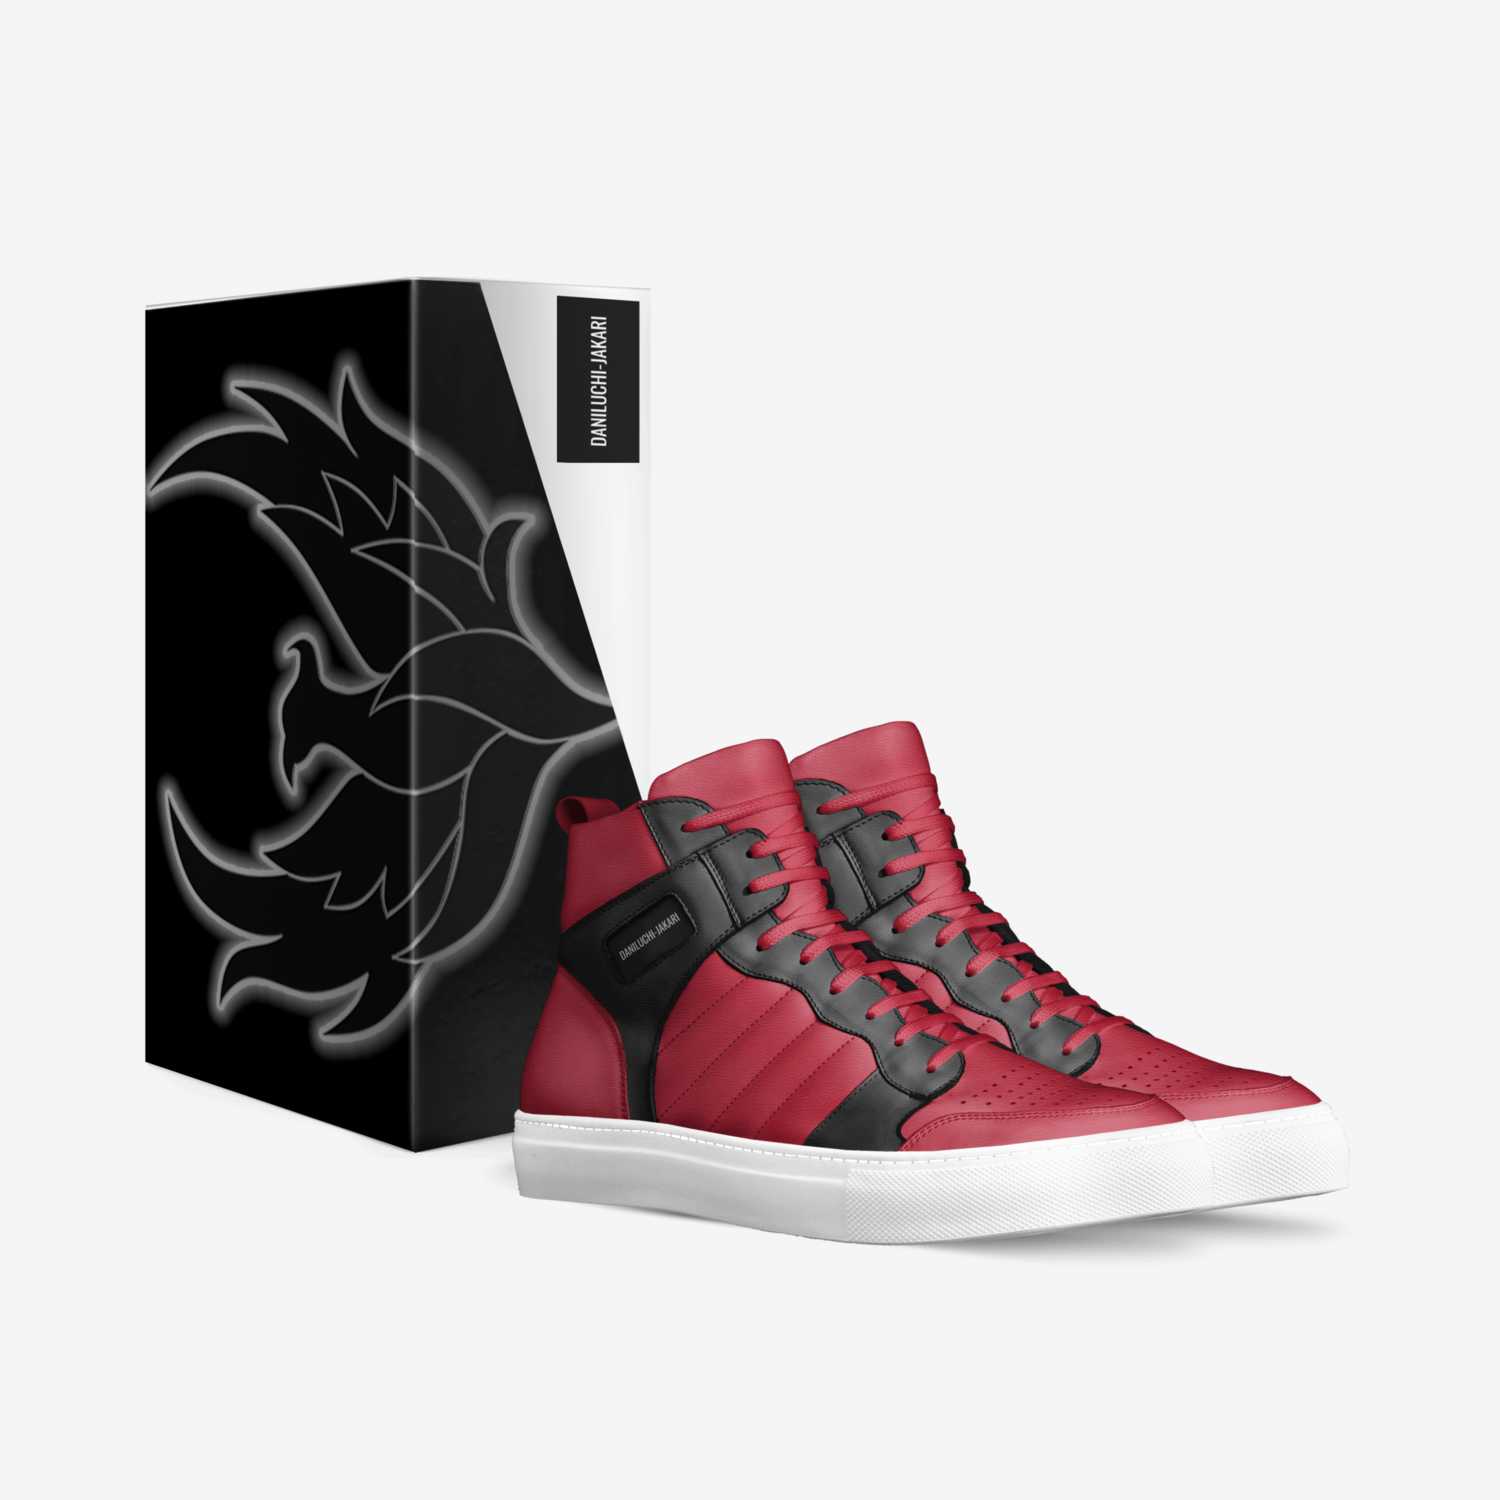 DANILUCHI-JAKARI custom made in Italy shoes by Luchina Danielle | Box view